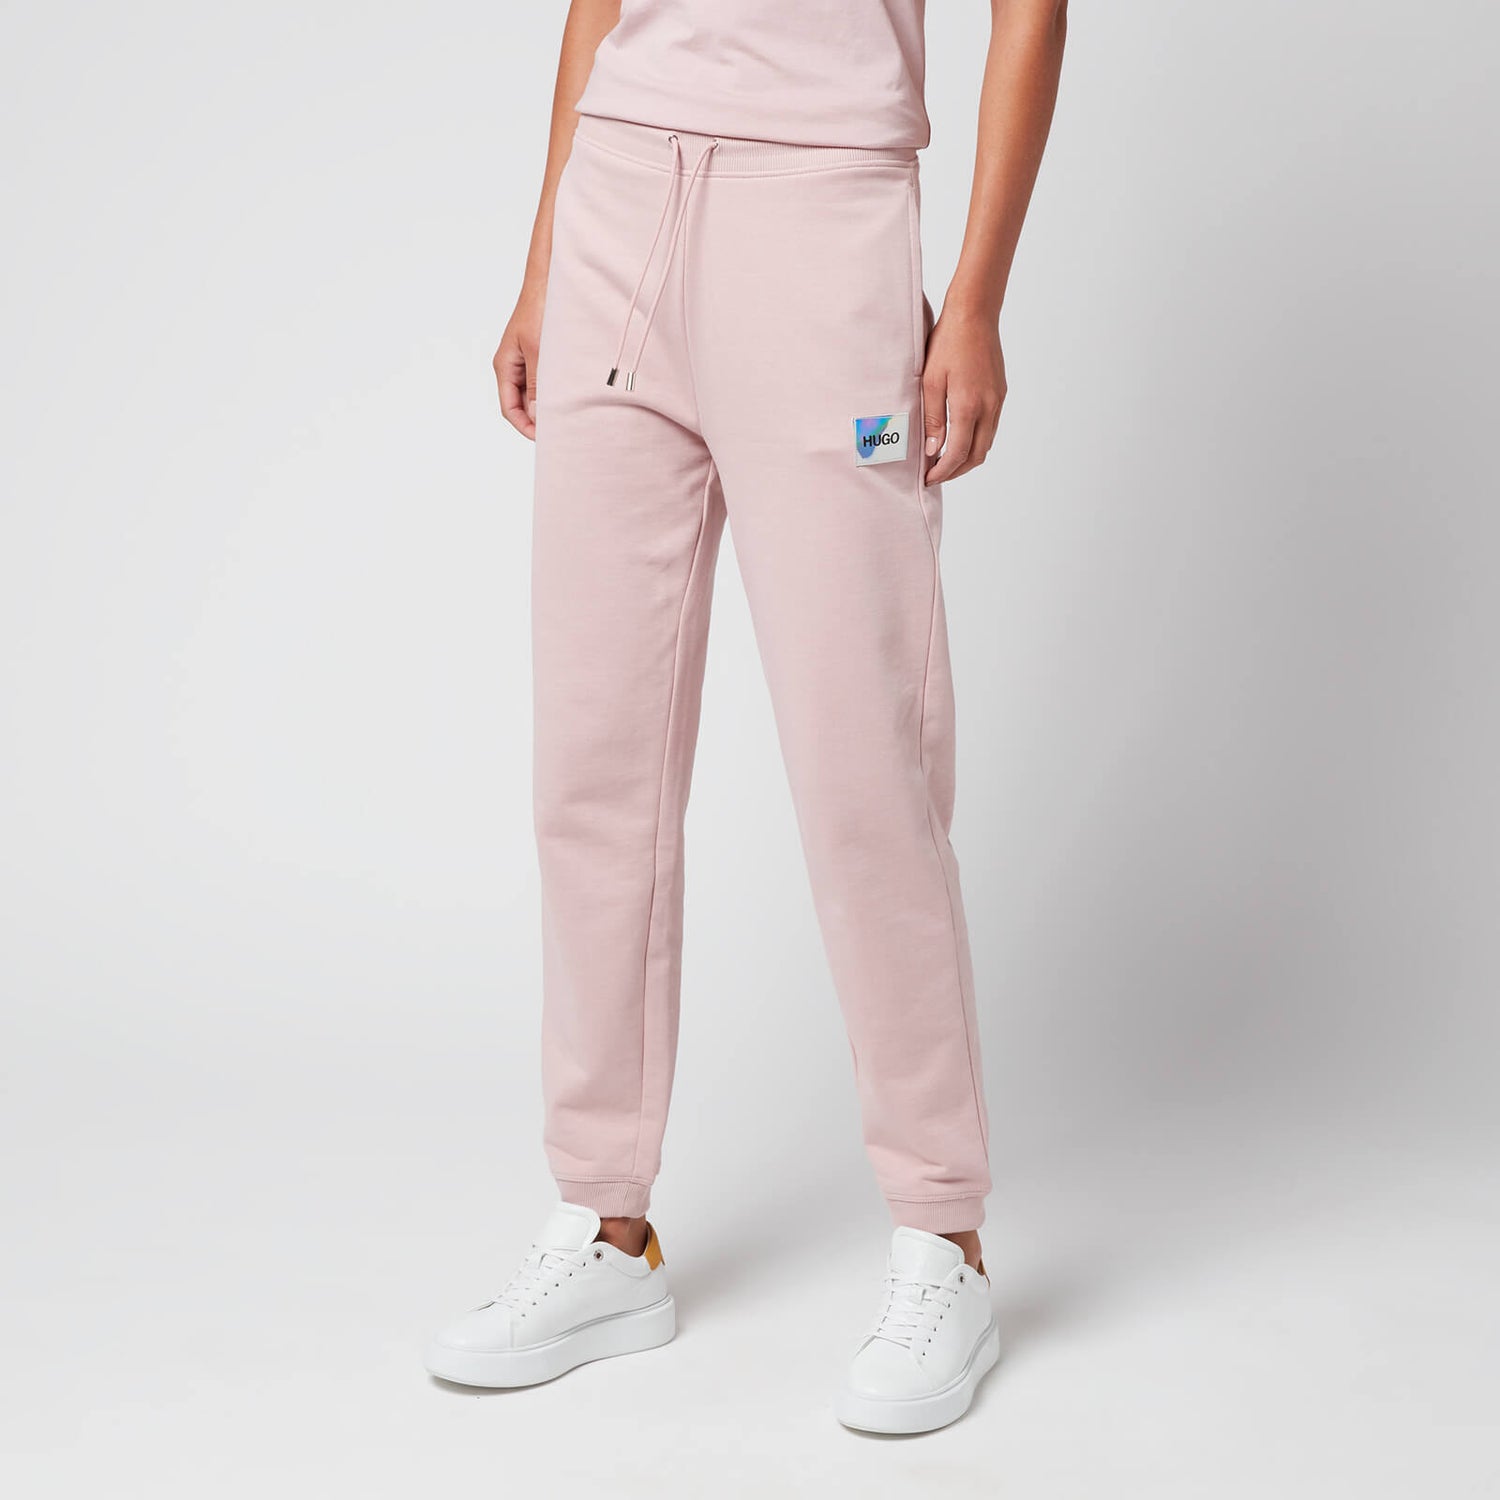 HUGO Women's Red Label Dachibi Sweatpants - Light/Pastel Pink - S